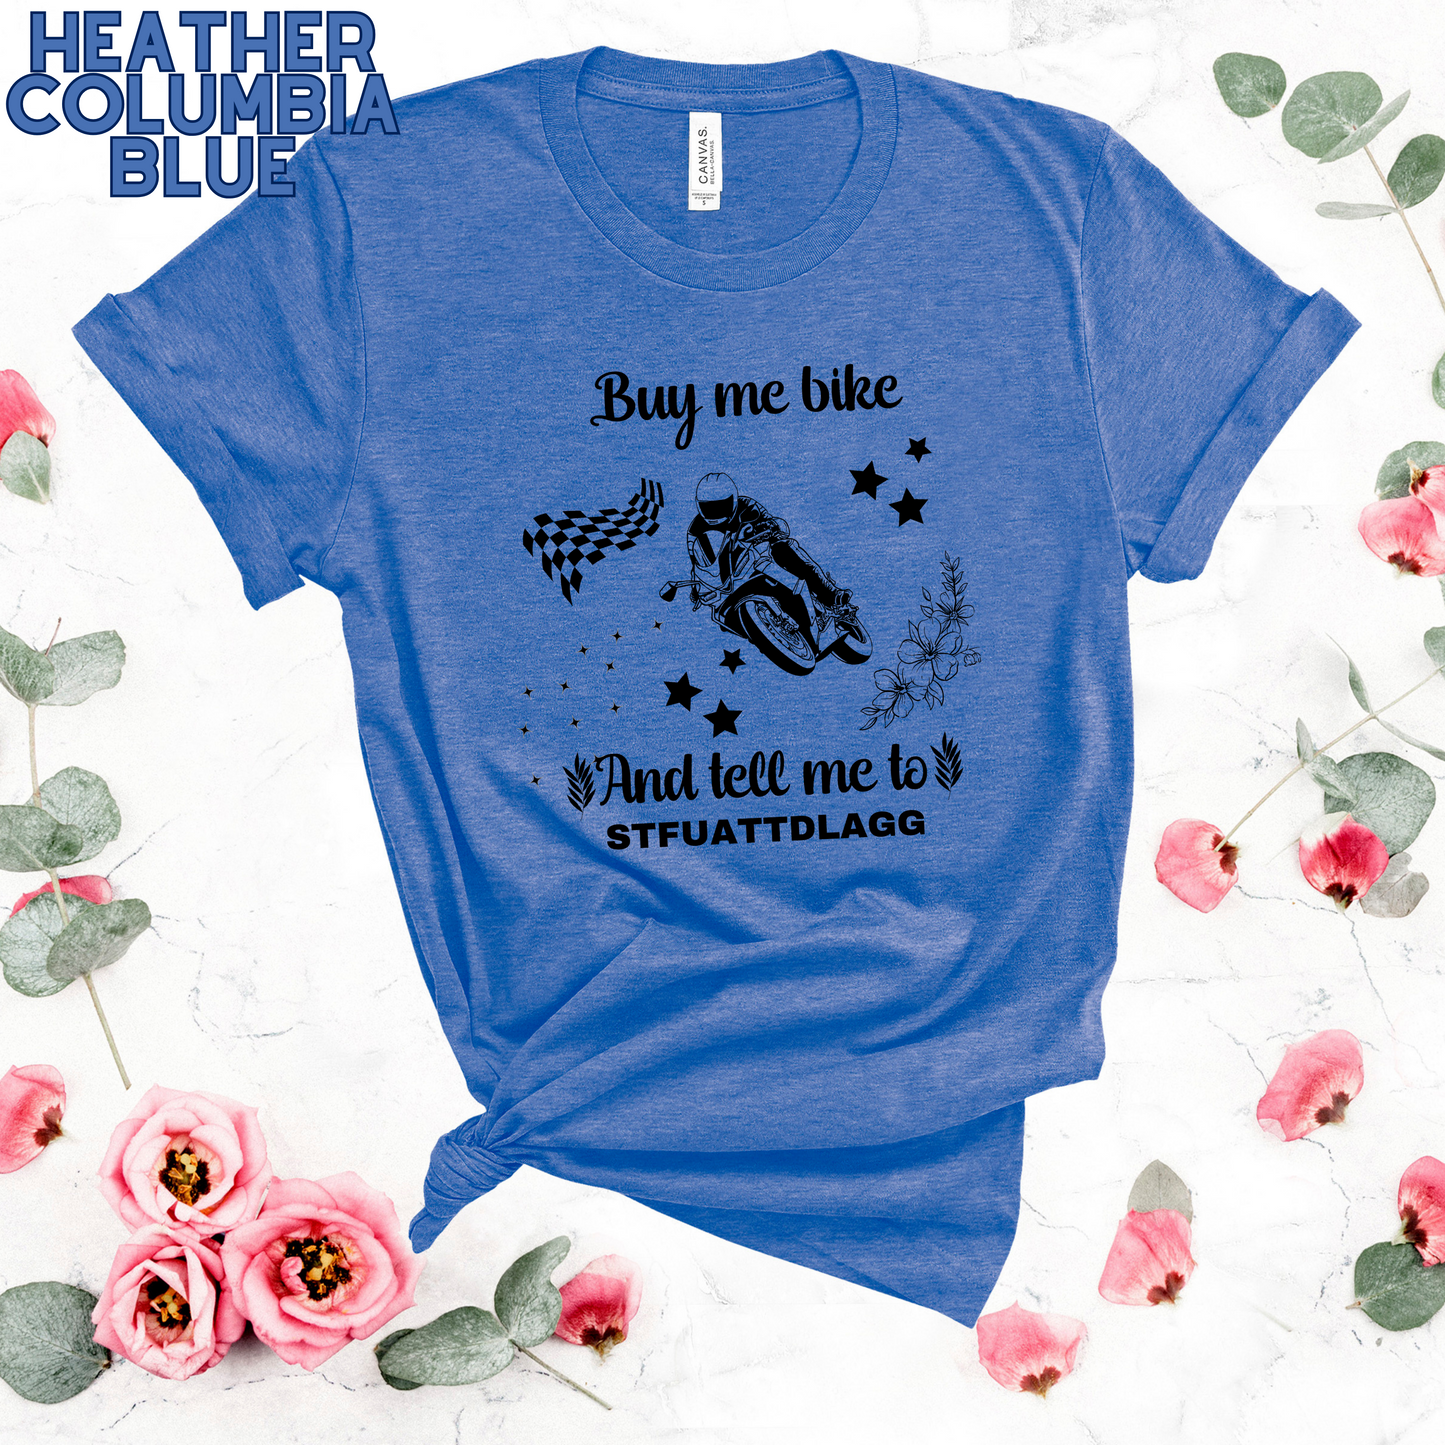 Biker Girl, Motorcycle Girl T-Shirt - Buy Me a Bike and Tell Me to STFUATTDLAGG T-Shirt   